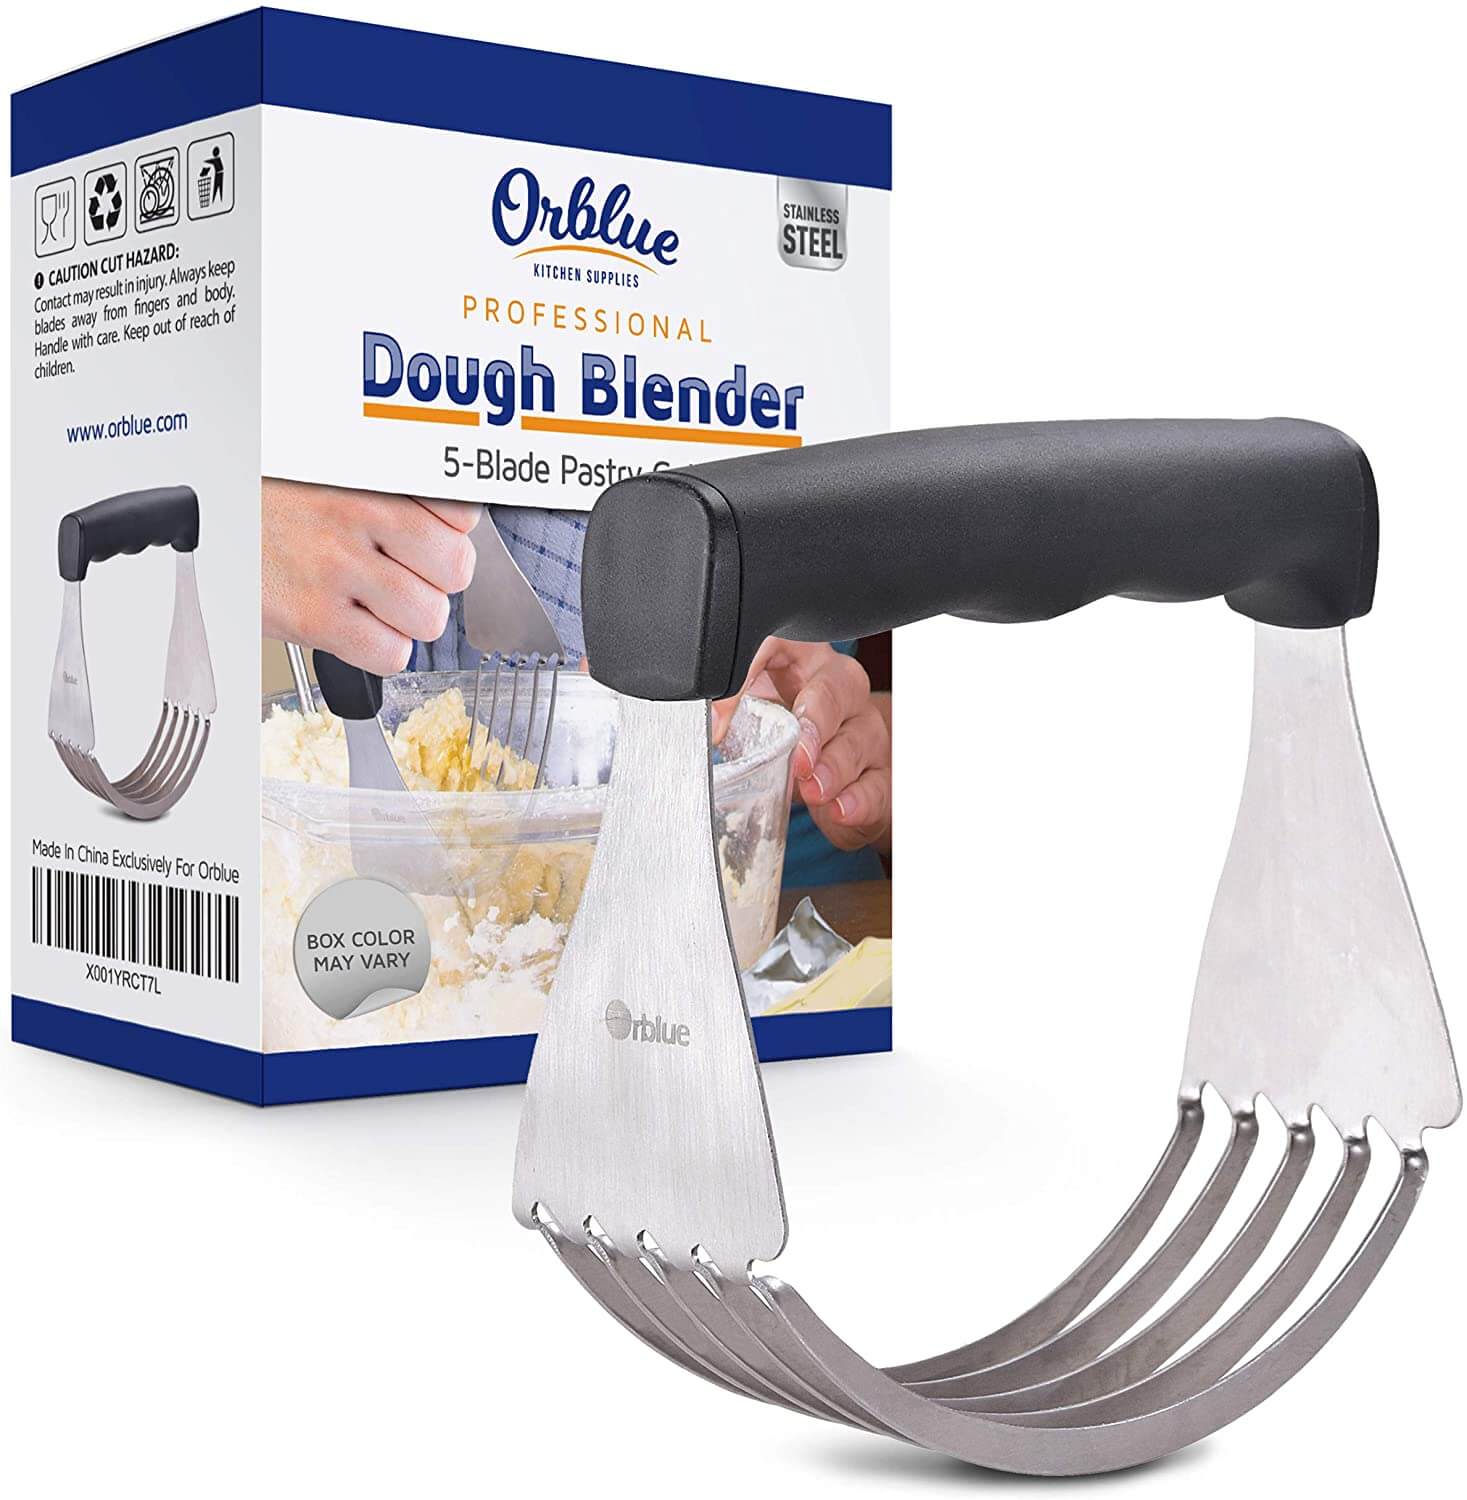 https://www.foodsharkmarfa.com/wp-content/uploads/2020/09/Orblue-Dough-Blender-Pro-Premium-Stainless-Steel-Pastry-Cutter.jpg